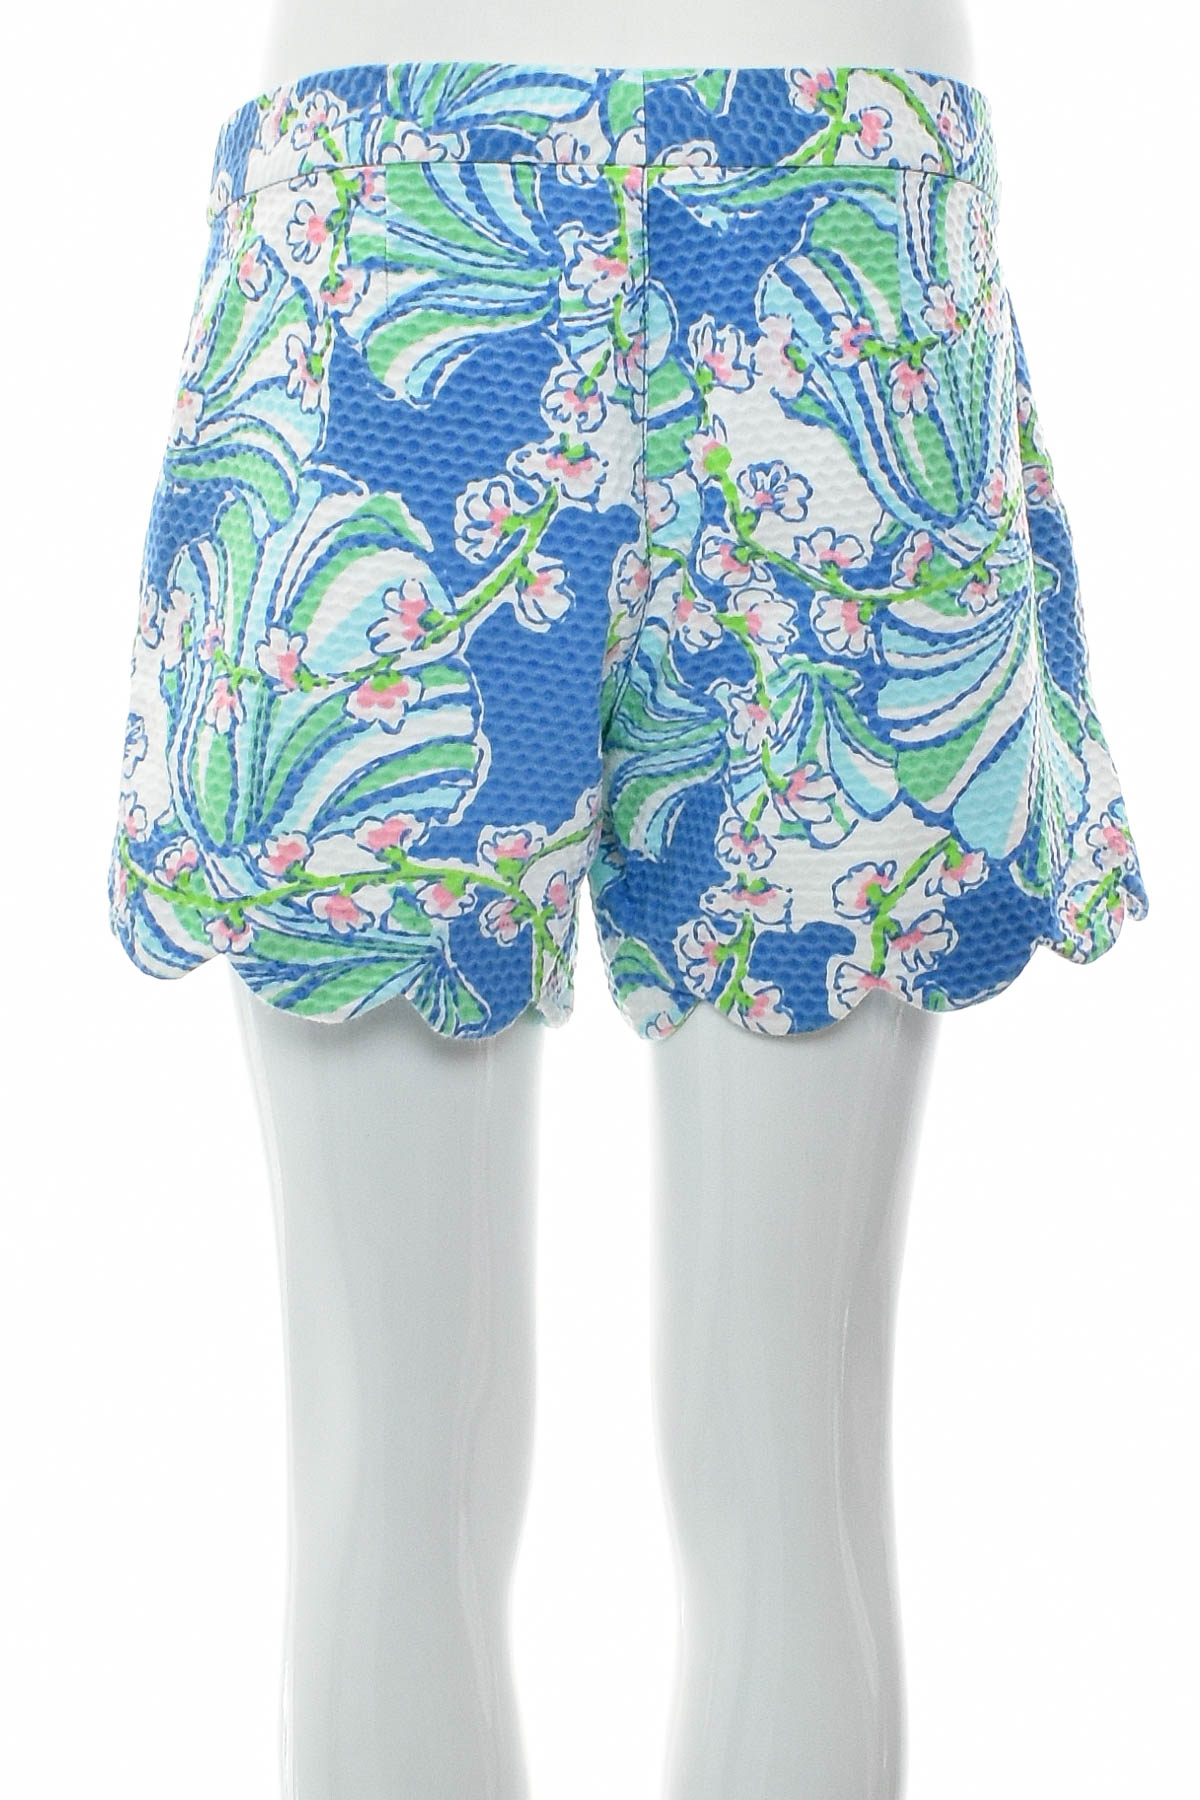 Female shorts - Lilly Pulitzer - 1